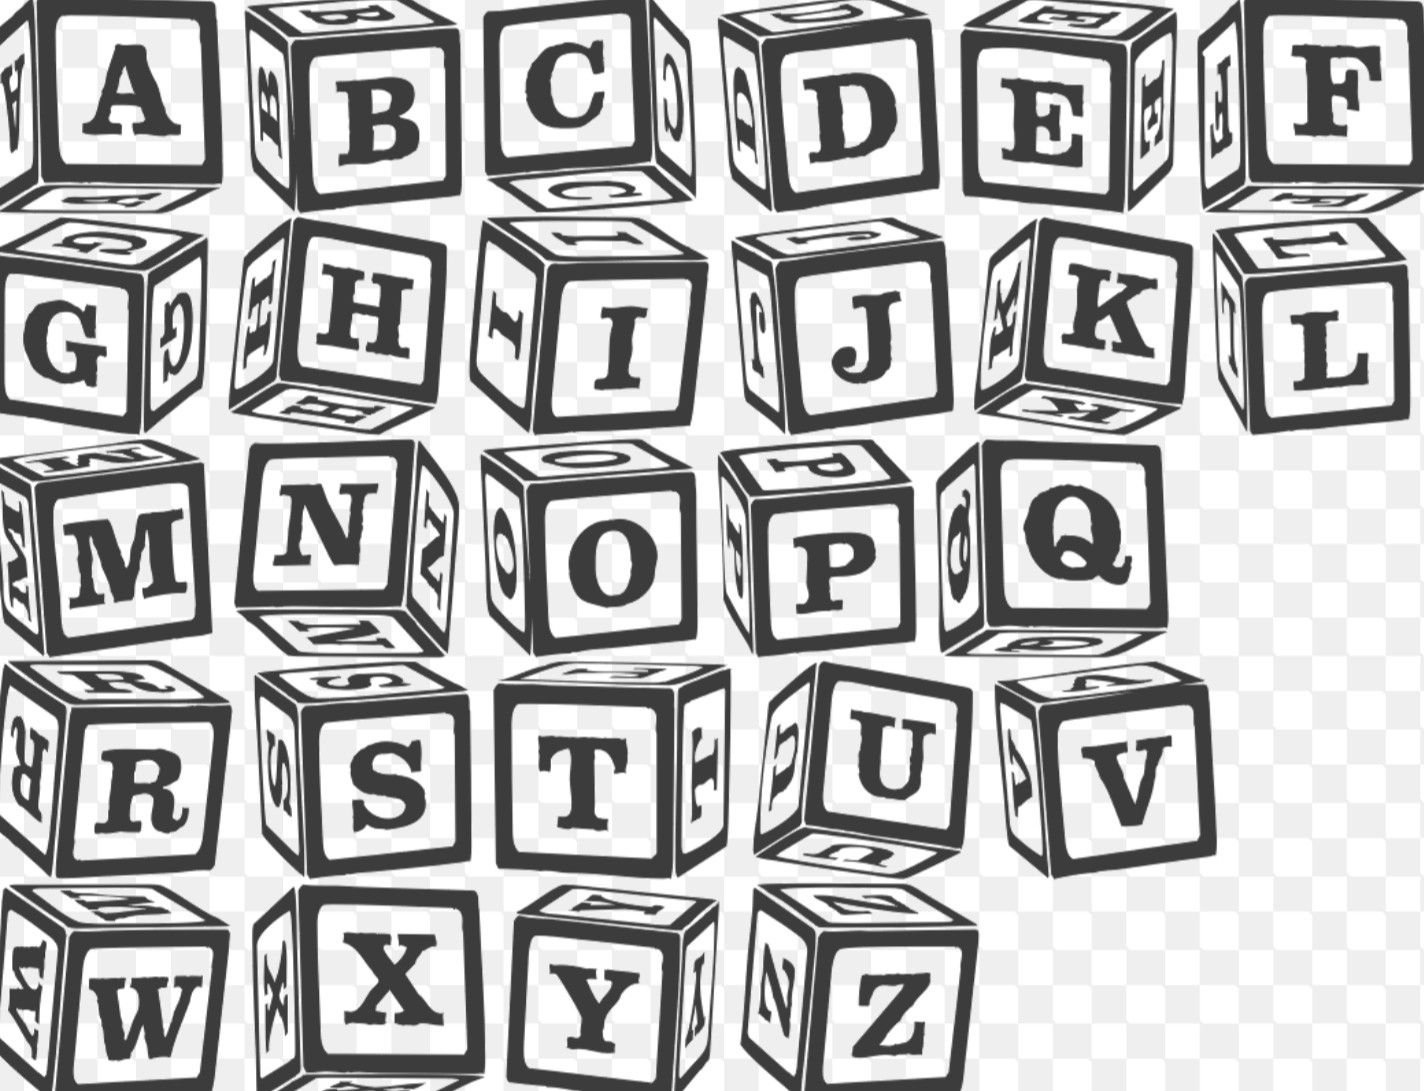 Кубики с буквами английского алфавита